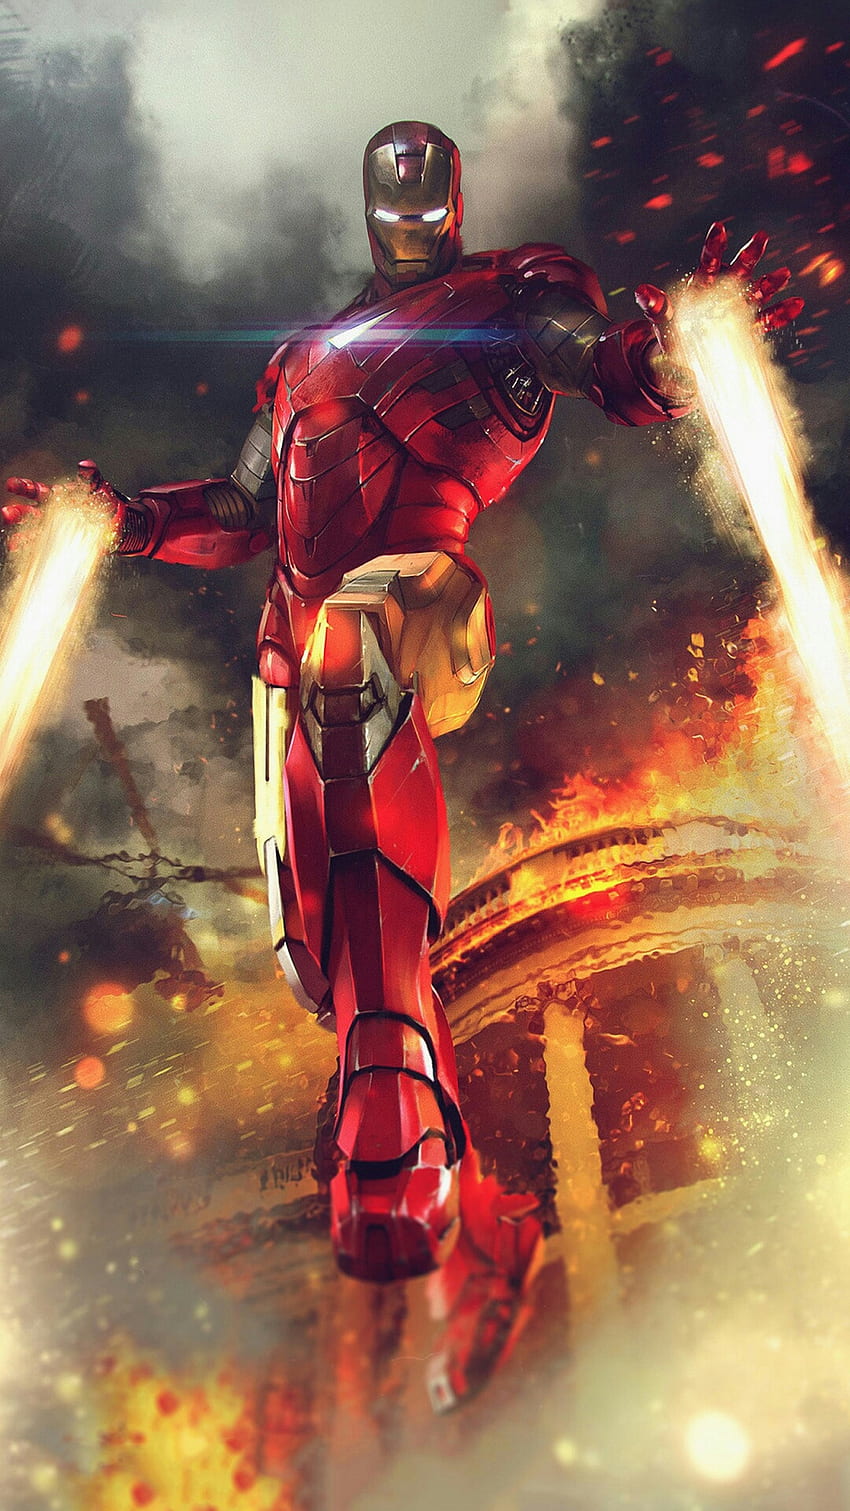 Iron Man anime feature announced